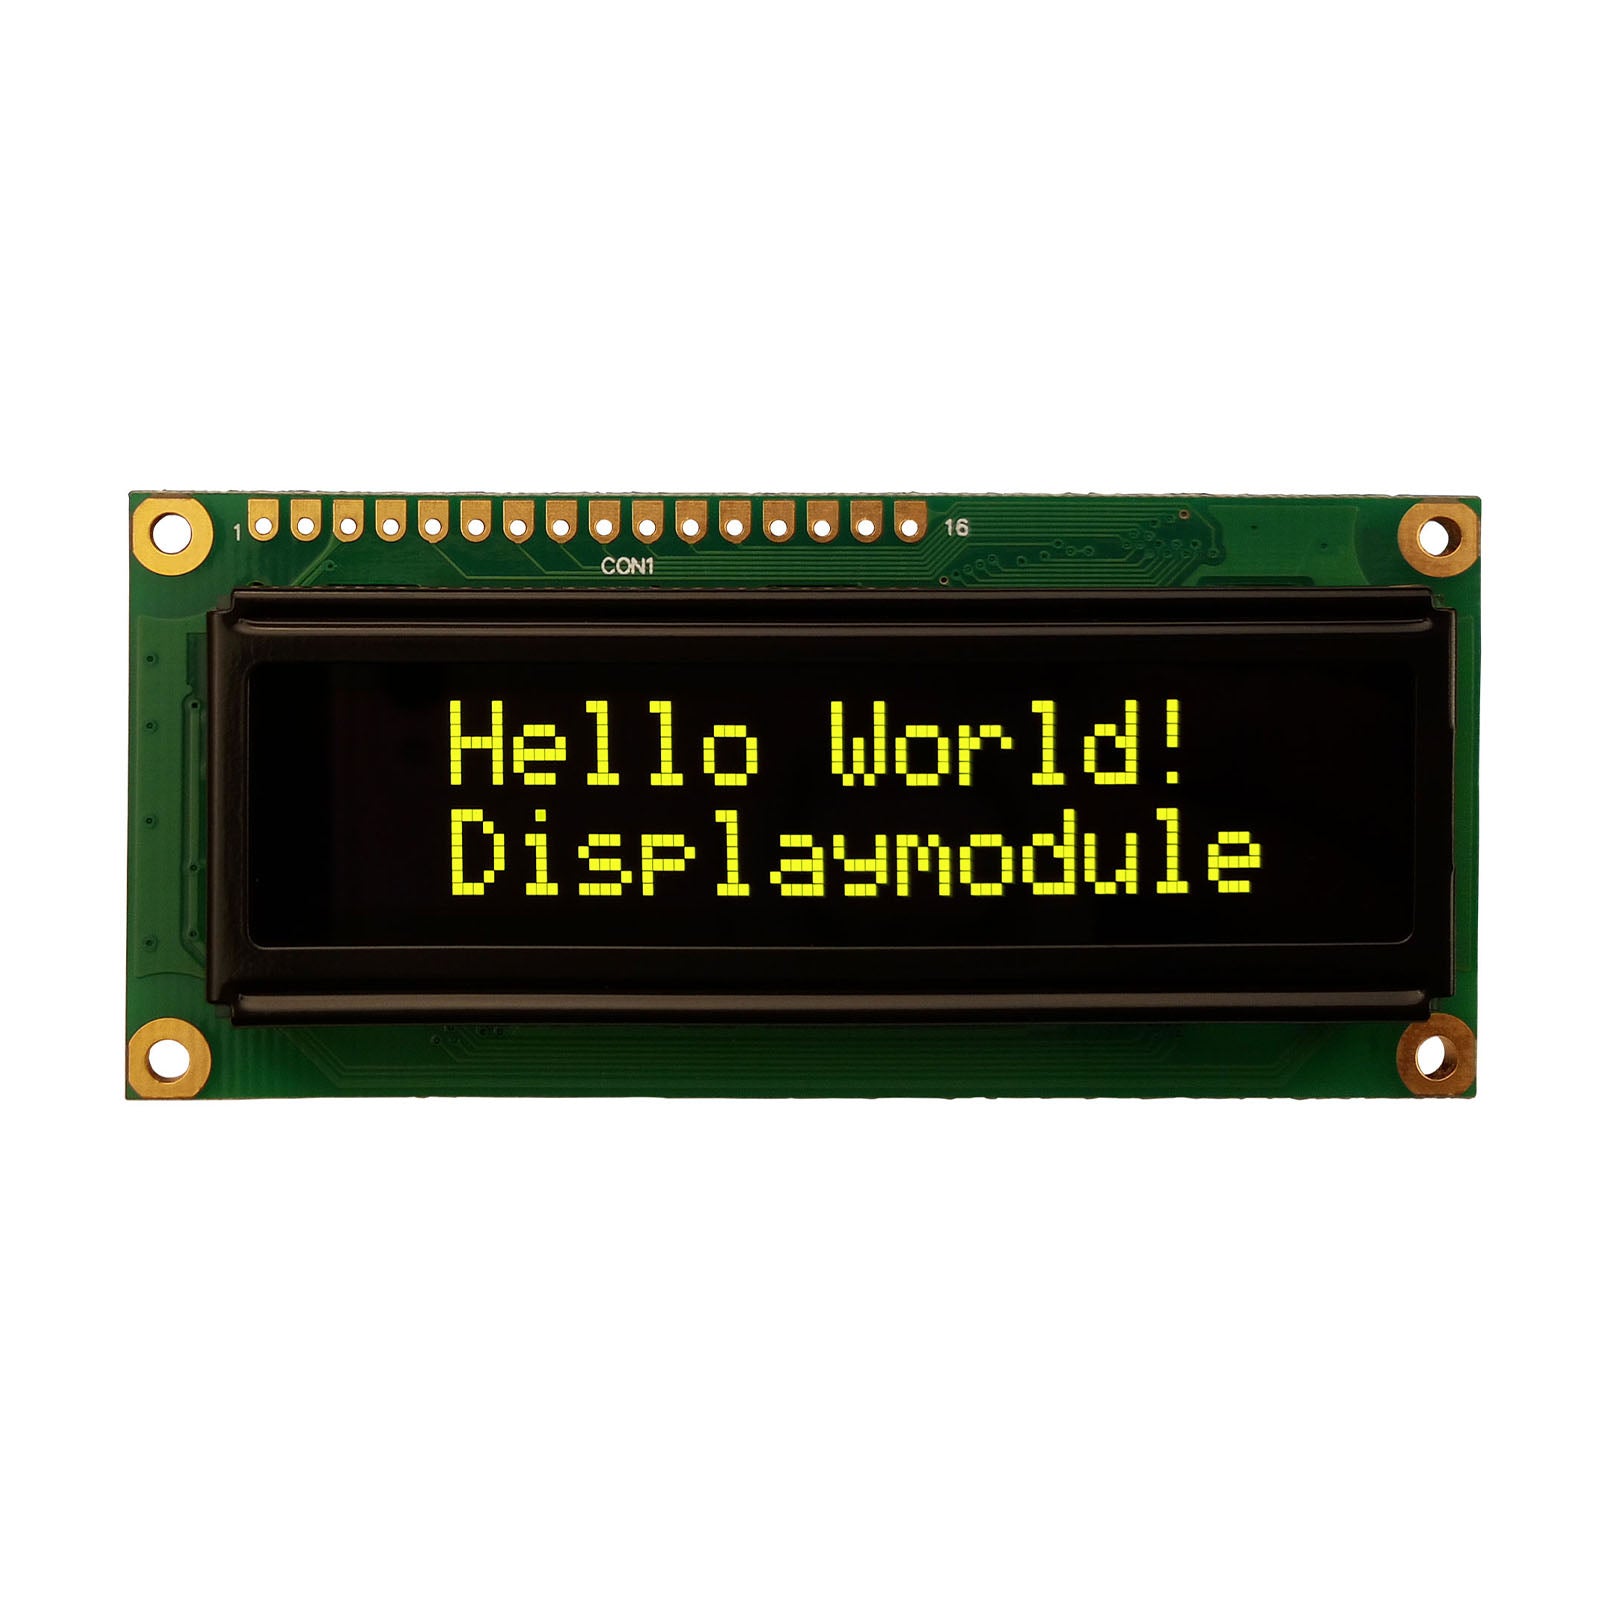 DisplayModule 16x2 Monochrome Character OLED Display - MCU, SPI, I2C